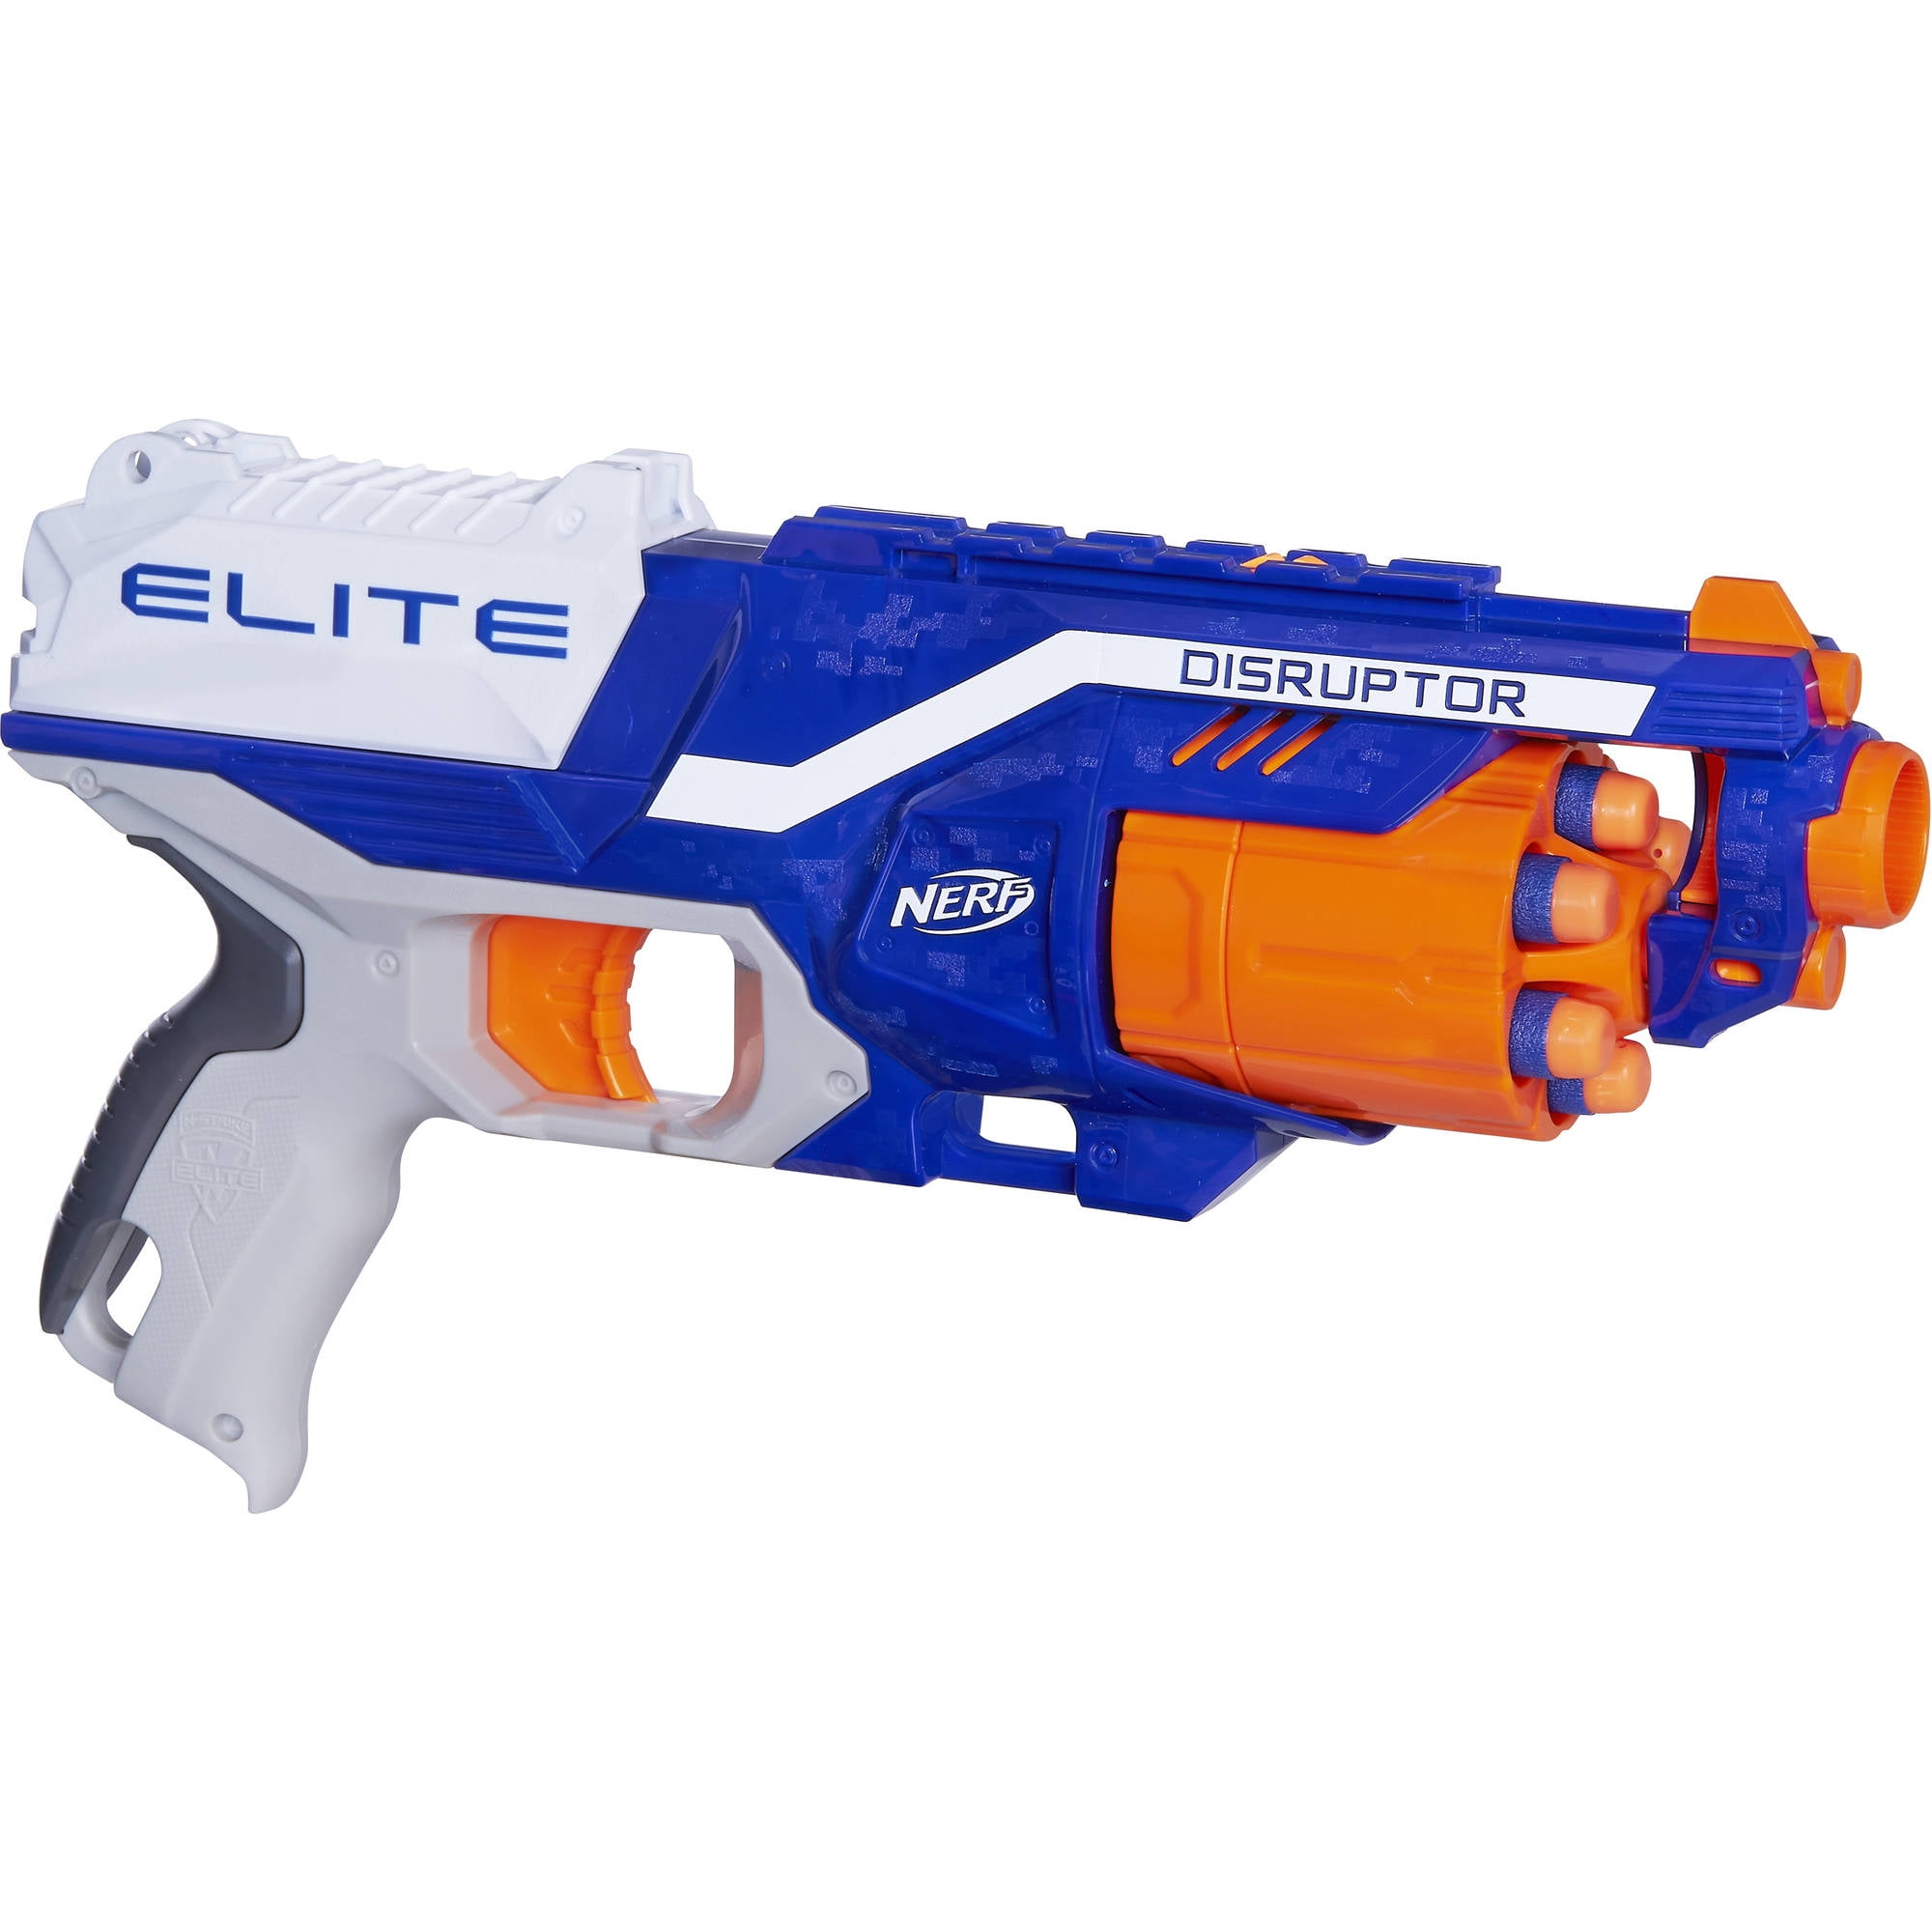 Elite Guns And Tactical Kits for Battle Nerf Gun N-Strike Darts Toy Blasters 